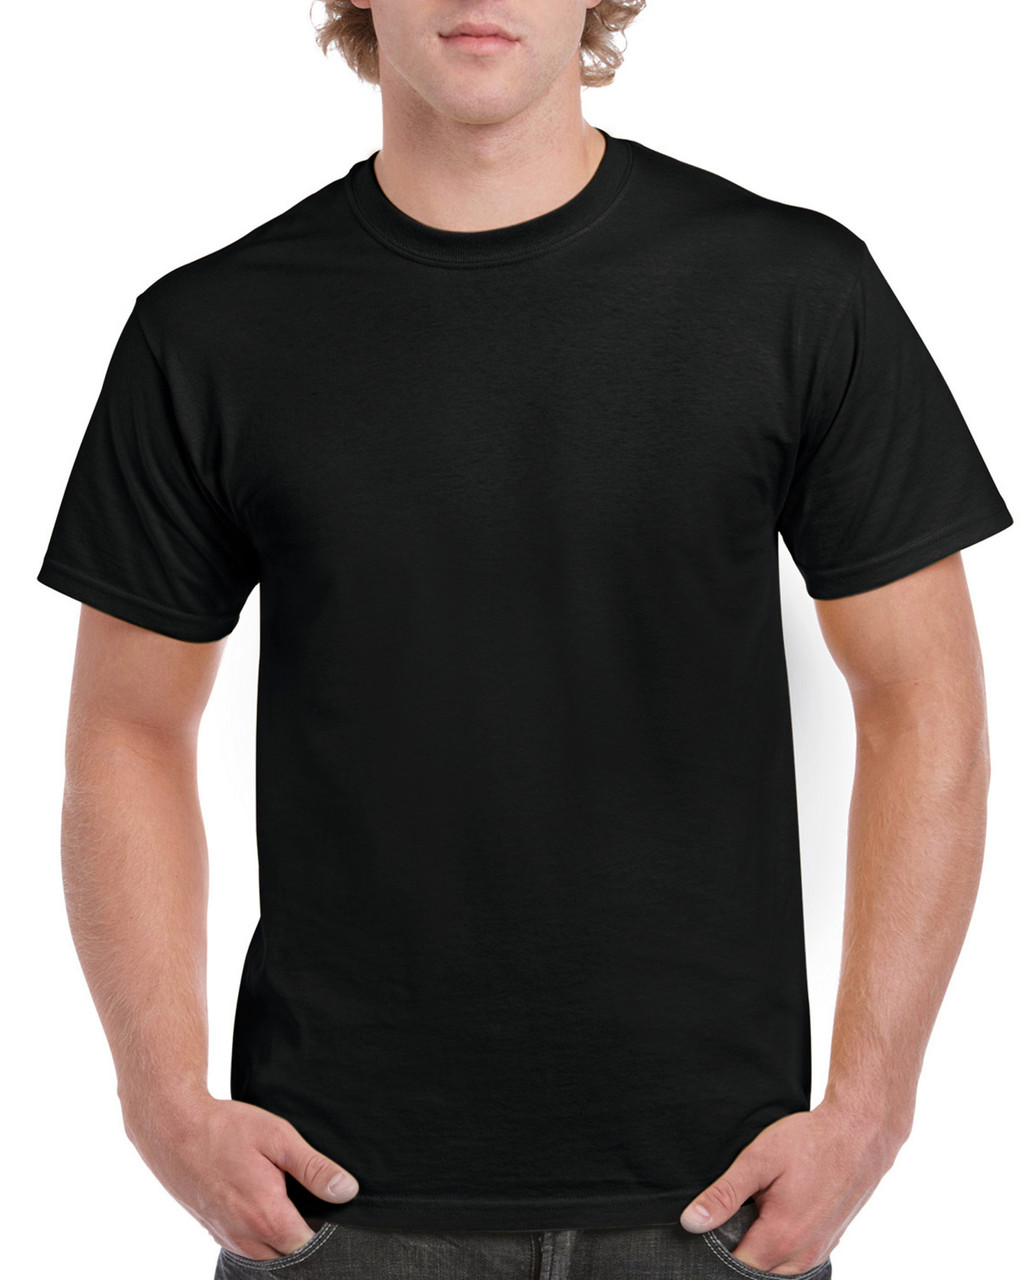 Gildan Hammer Adult T-Shirt H000 - Black